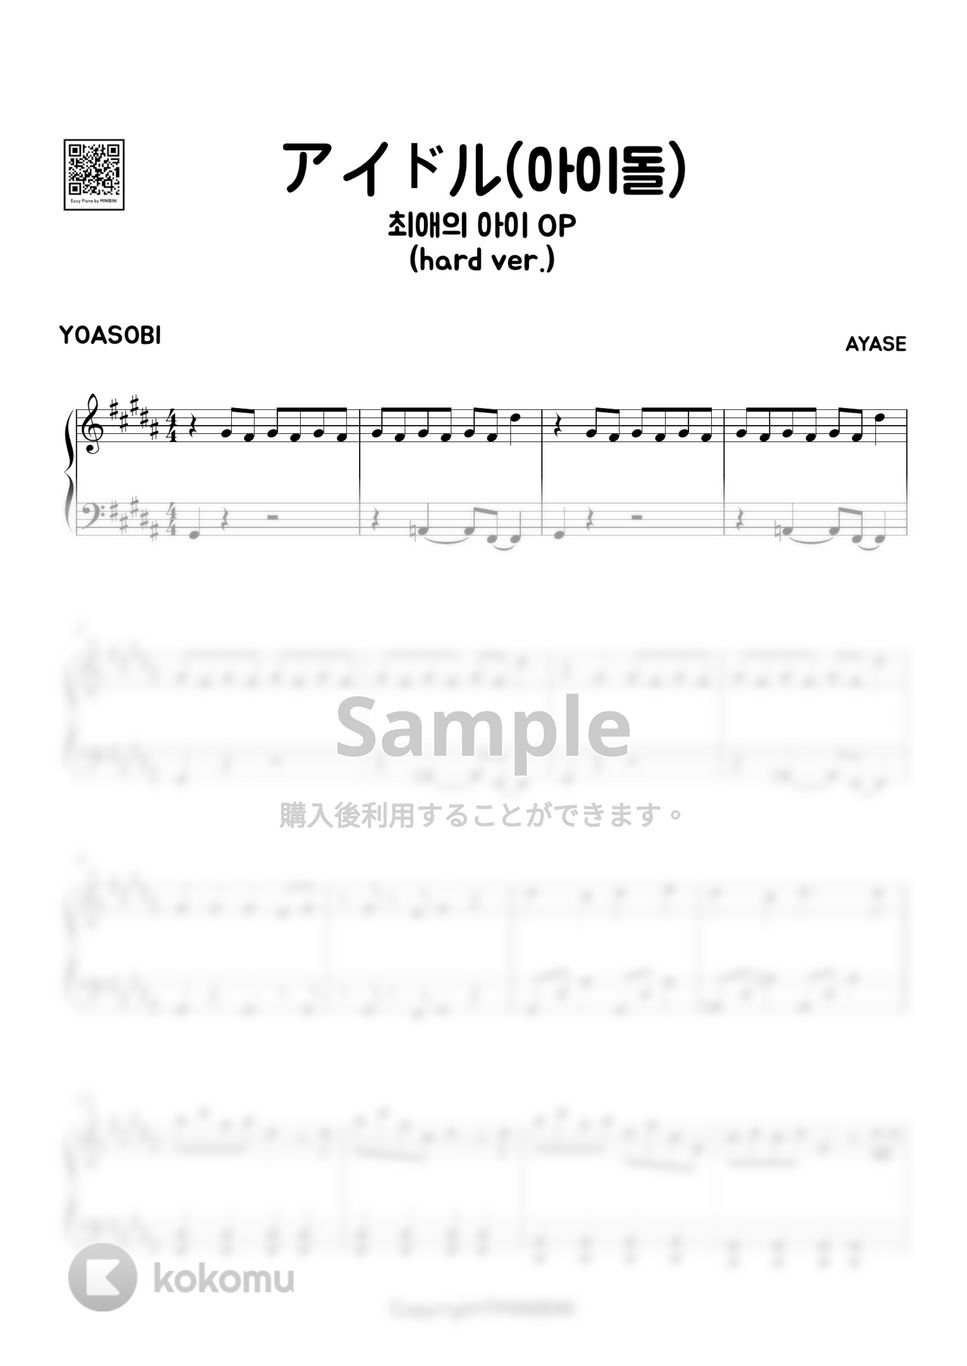 YOASOBI - アイドル(Hard Ver.) (推しの子) by MINIBINI